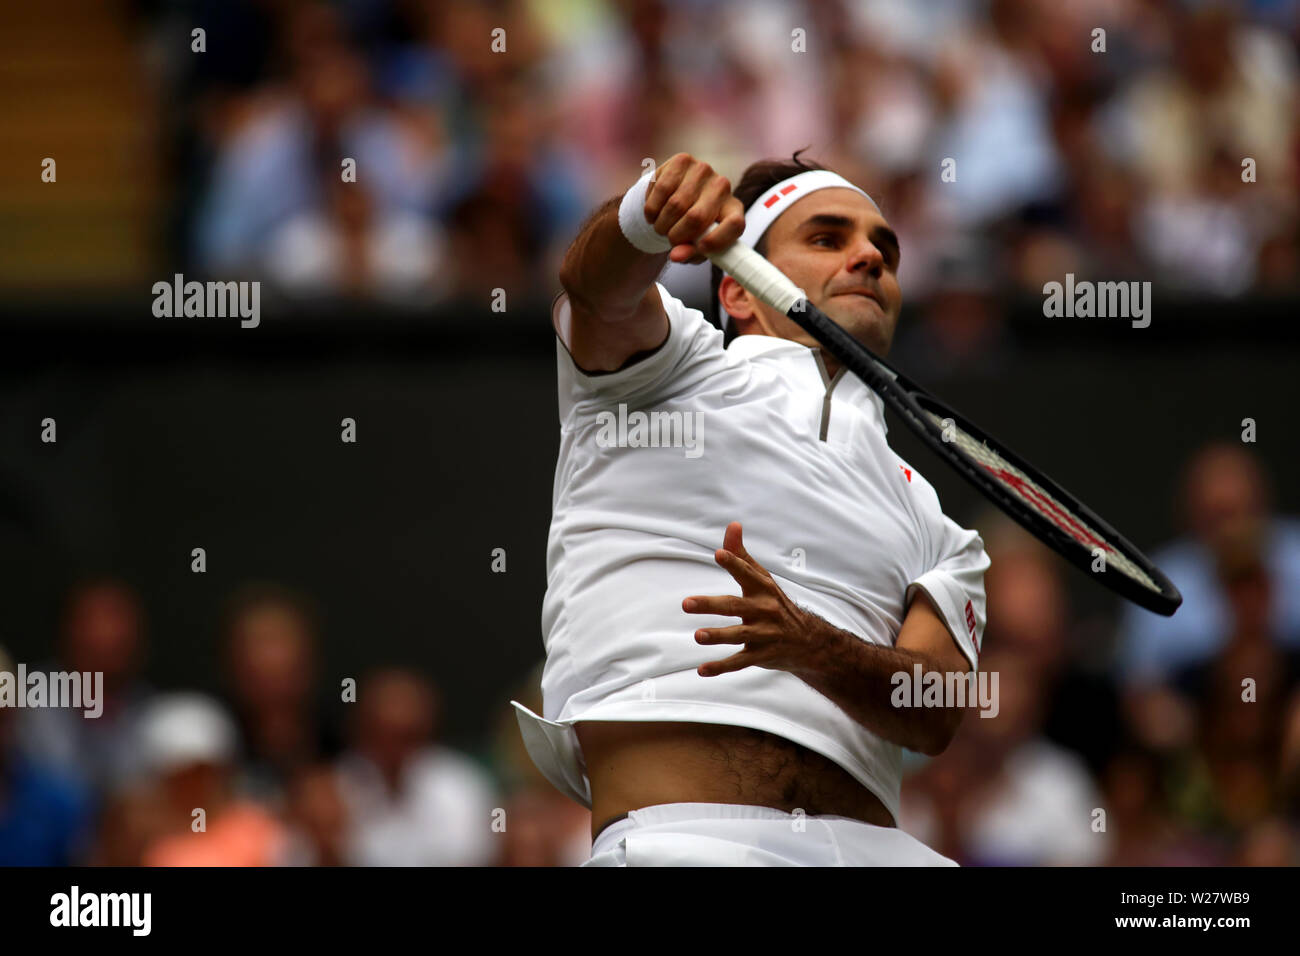 Wimbledon, 6. Juli 2019 - Roger Federer während seiner dritten Runde gegen Lucas Pouille von Frankreich heute in Wimbledon. Federer gewann in zwei Sätzen. Stockfoto